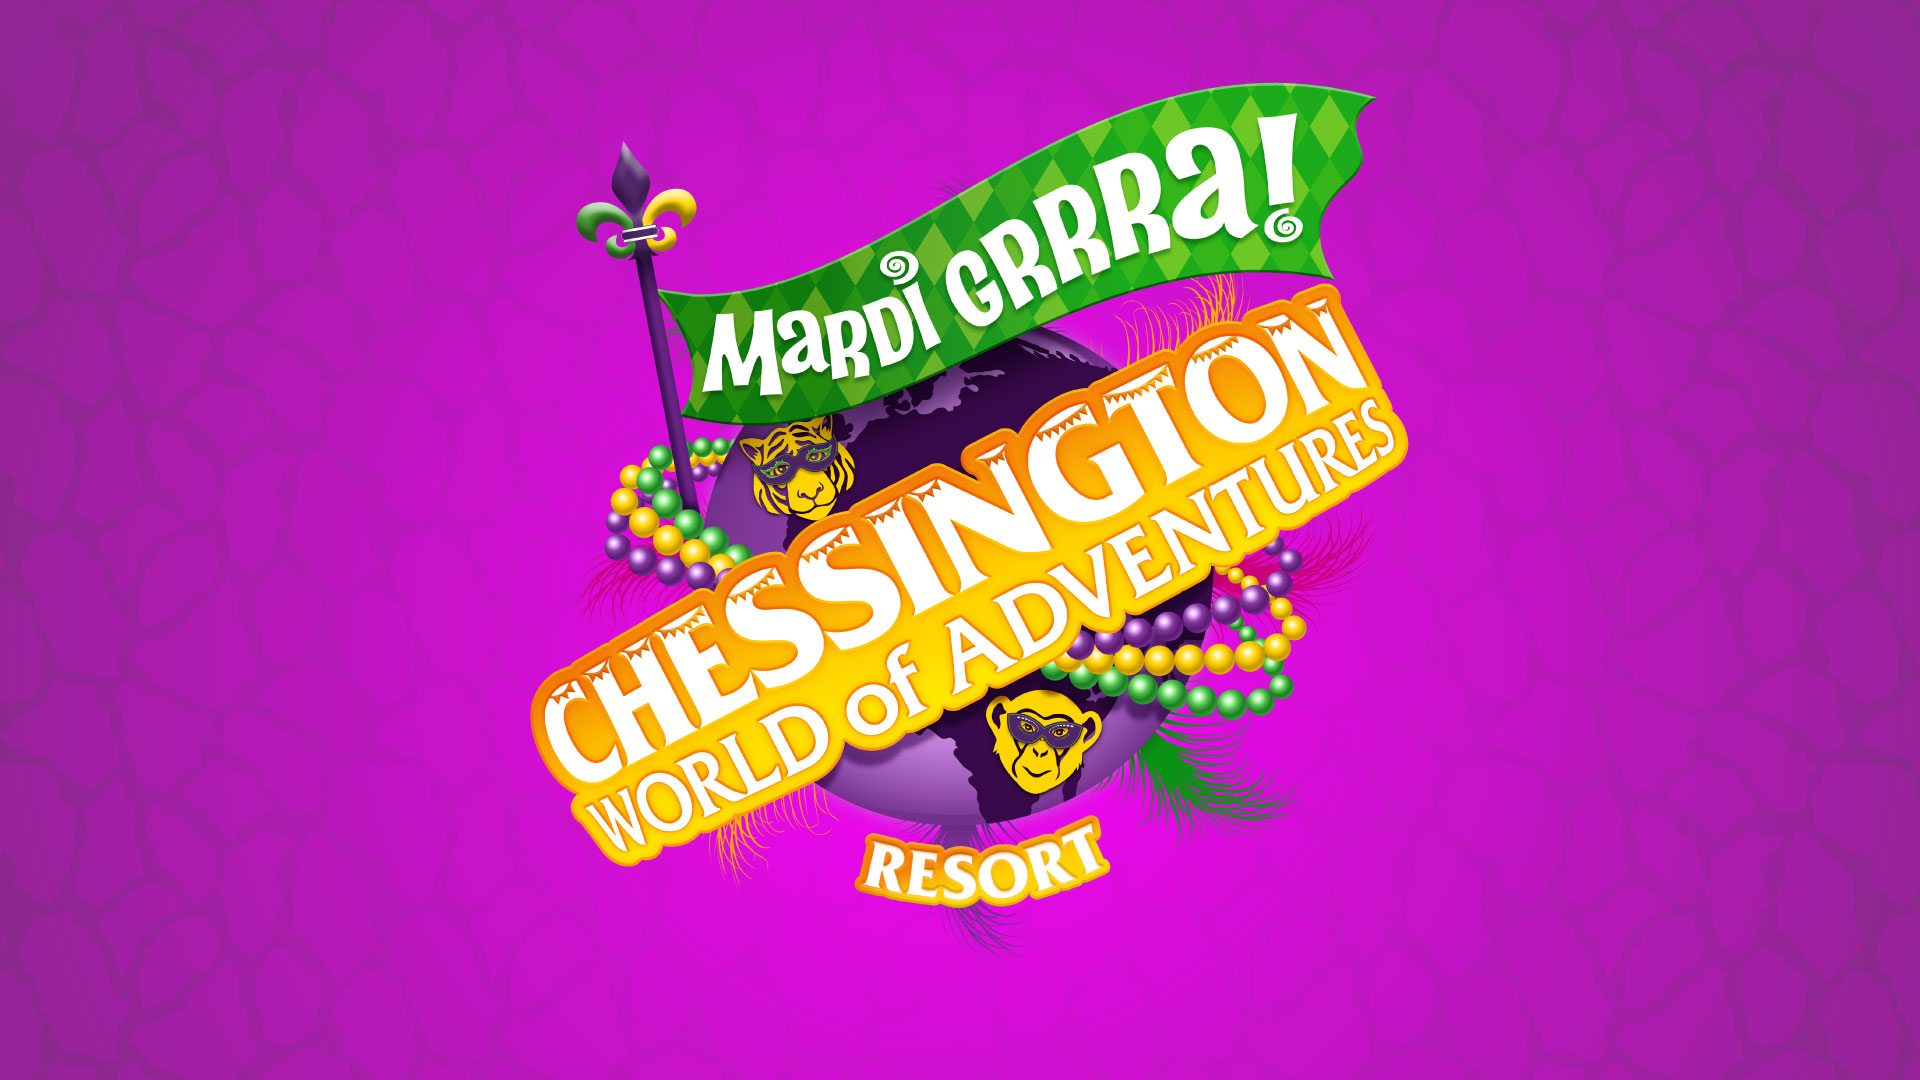 Mardi GRRRA family fun street carnival at Chessington World of Adventures Resort